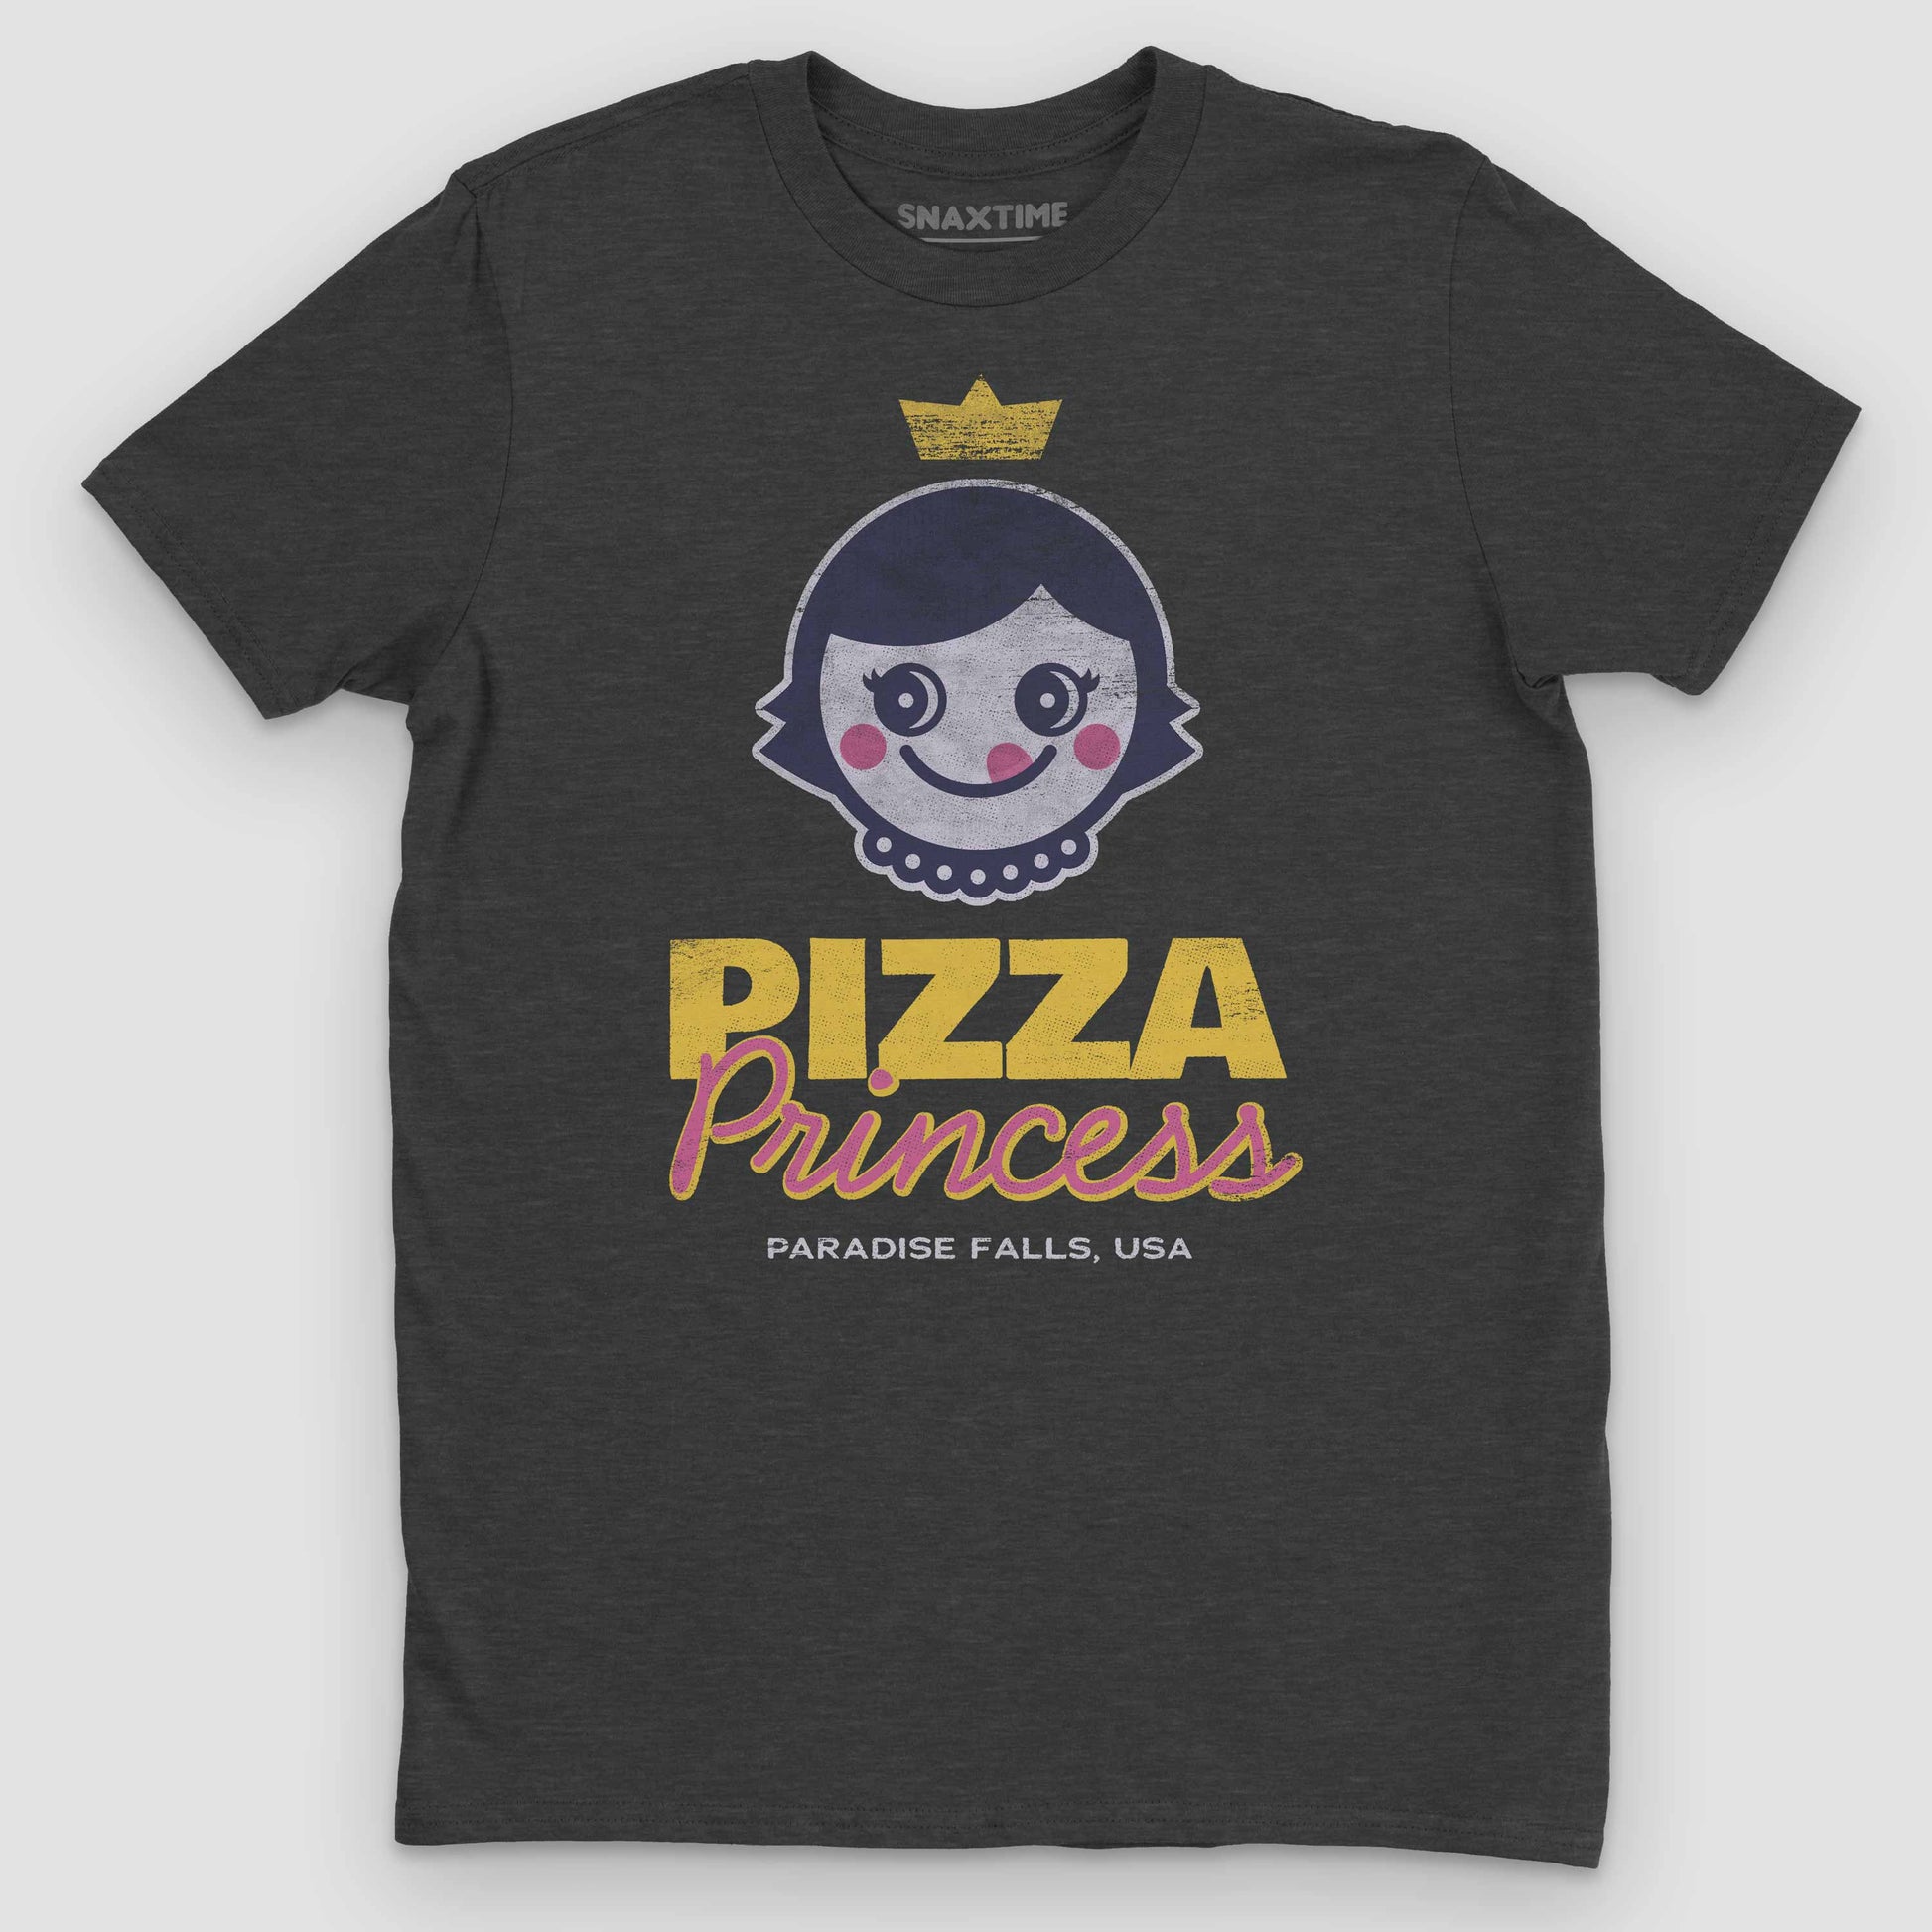 Heather Dark Grey Pizza Princess Graphic T-Shirt by Snaxtime